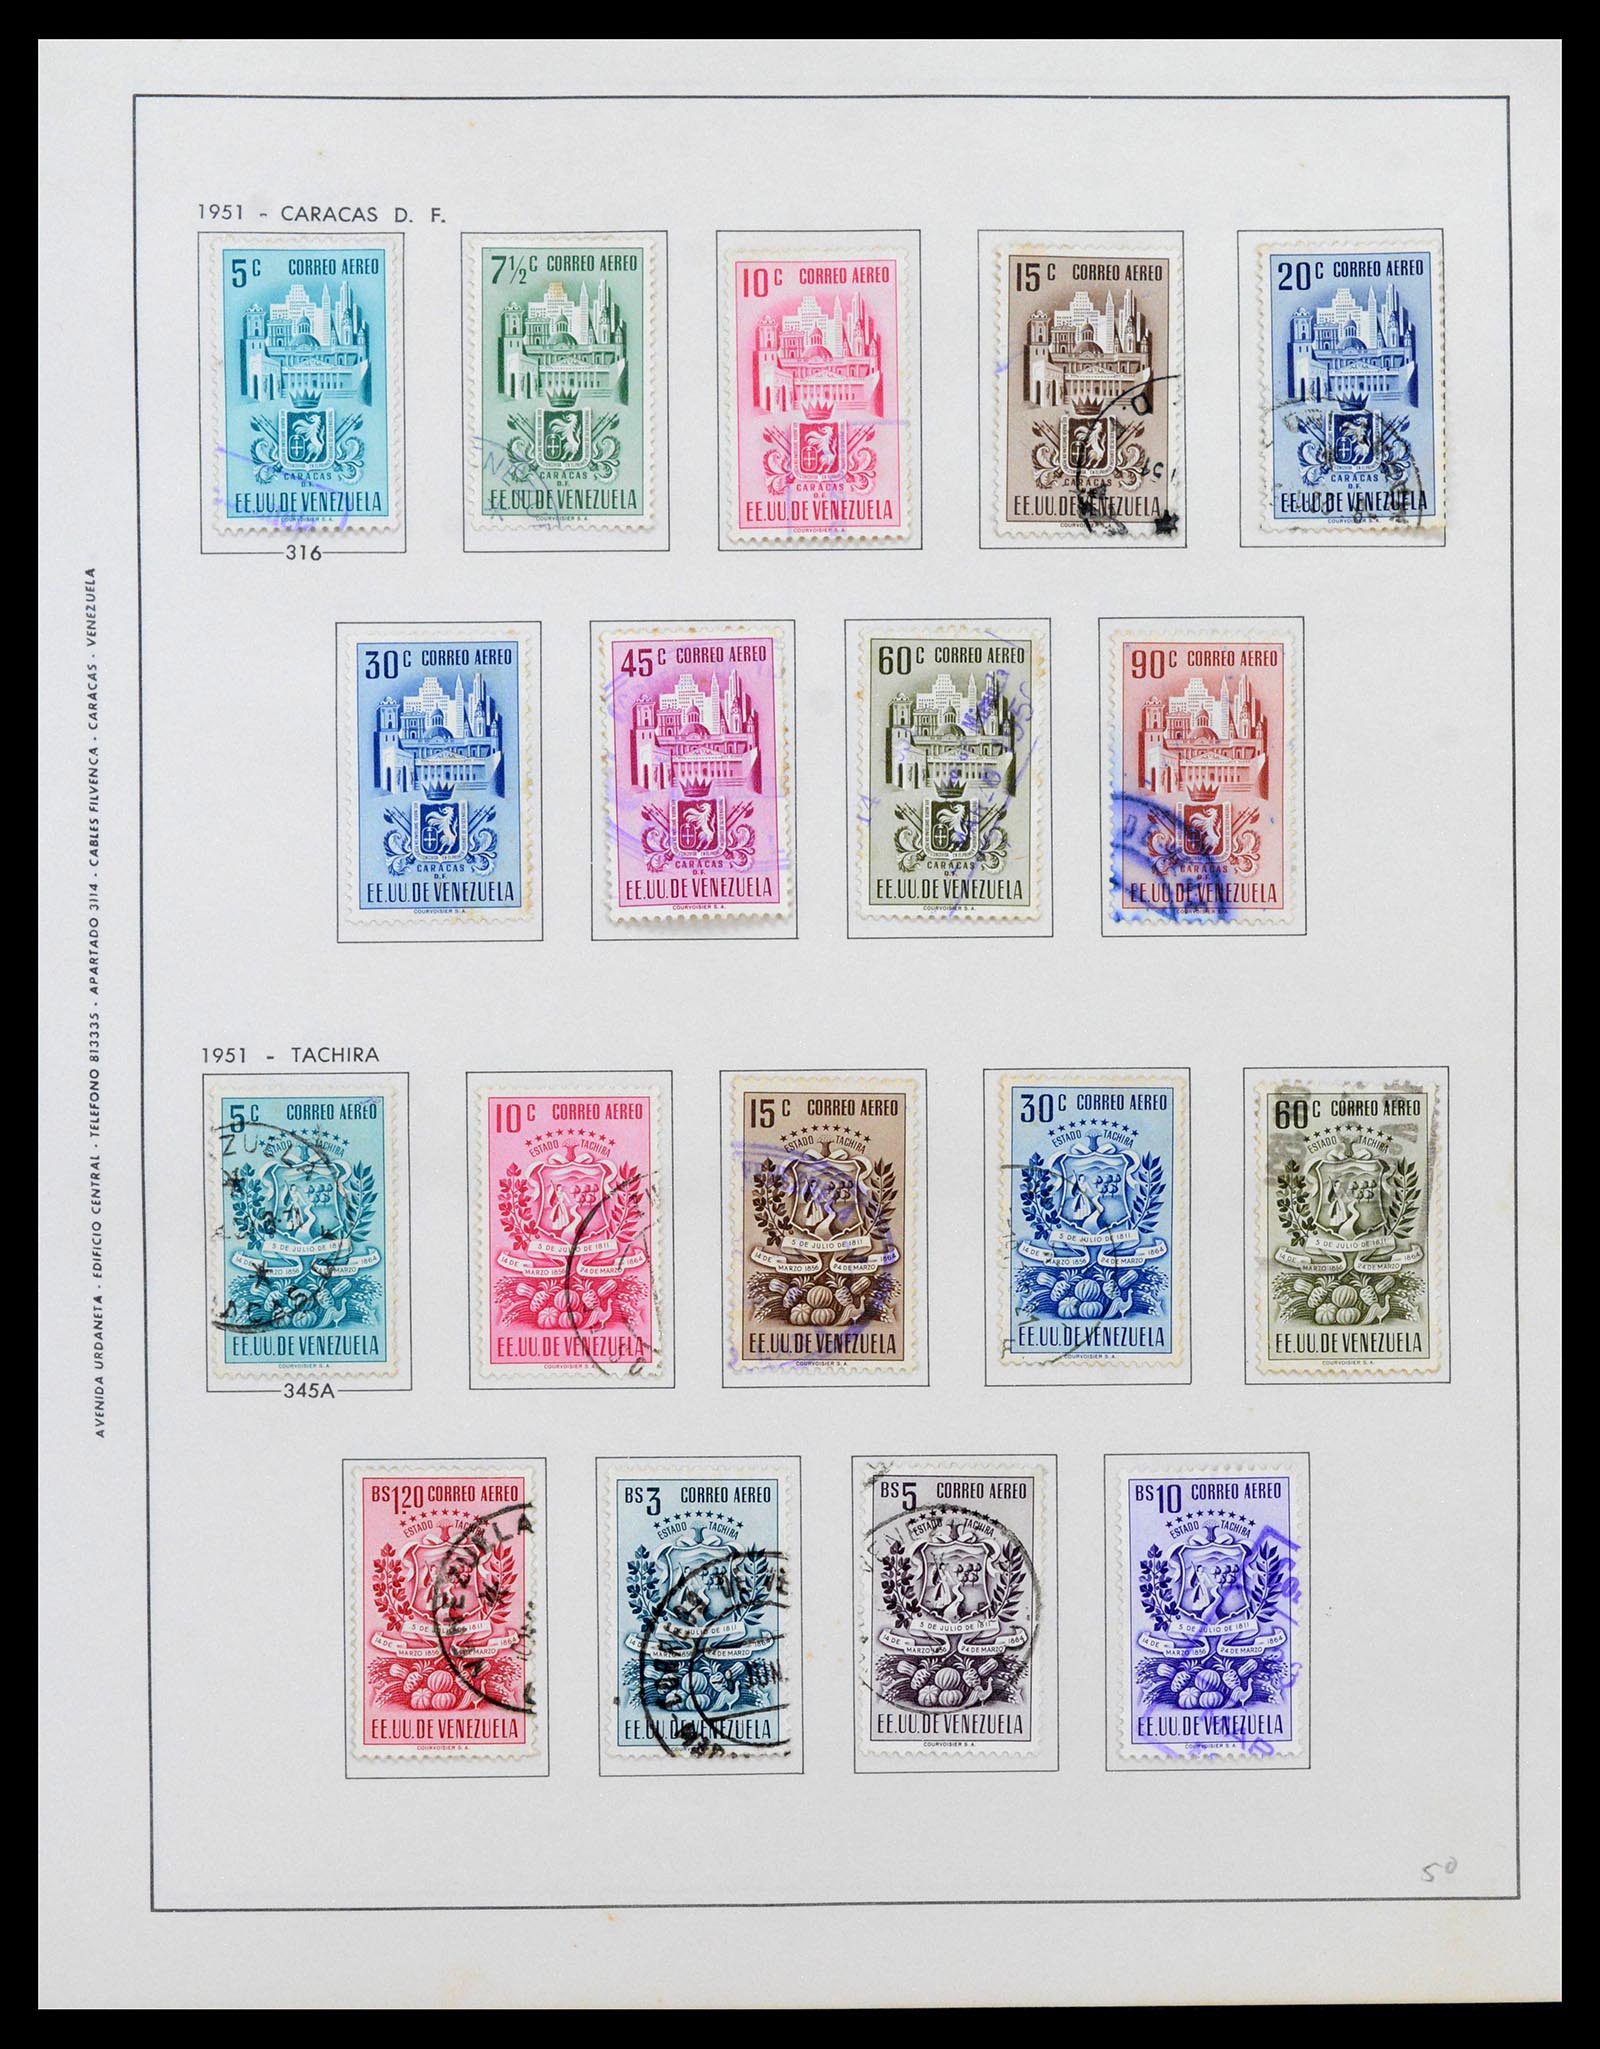 39436 0022 - Stamp collection 39436 Venezuela 1859-1985.